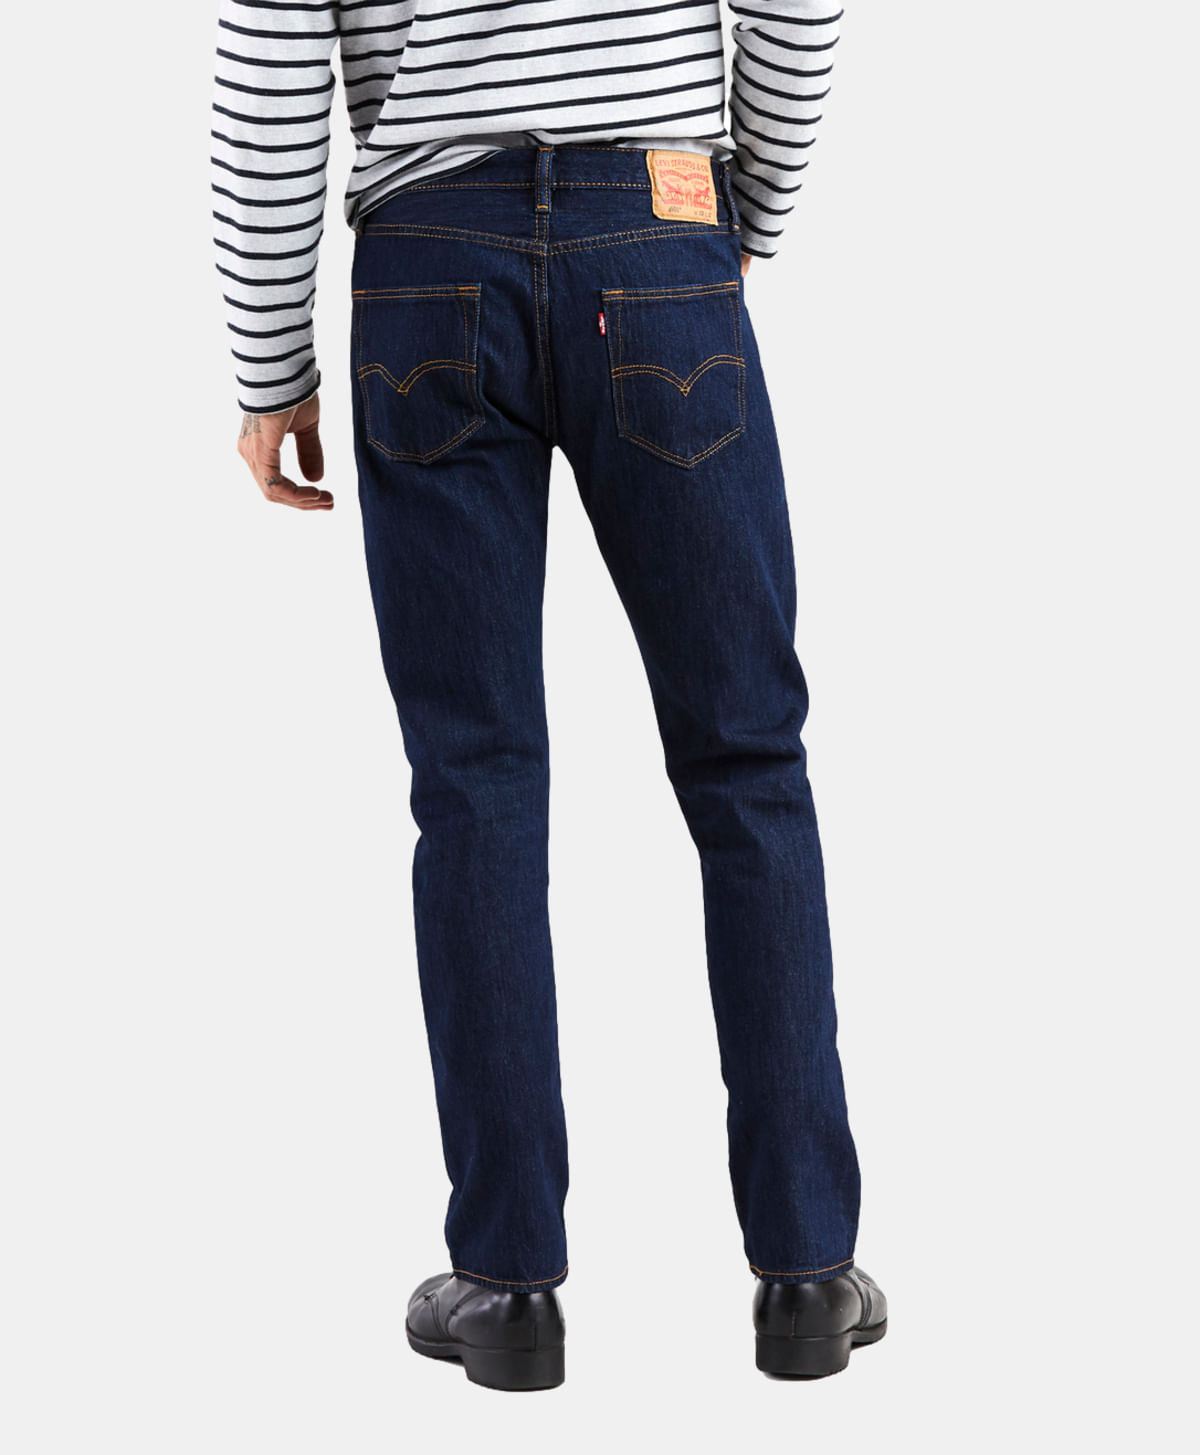 Pantalones Levis Jeans Mayoreo 501